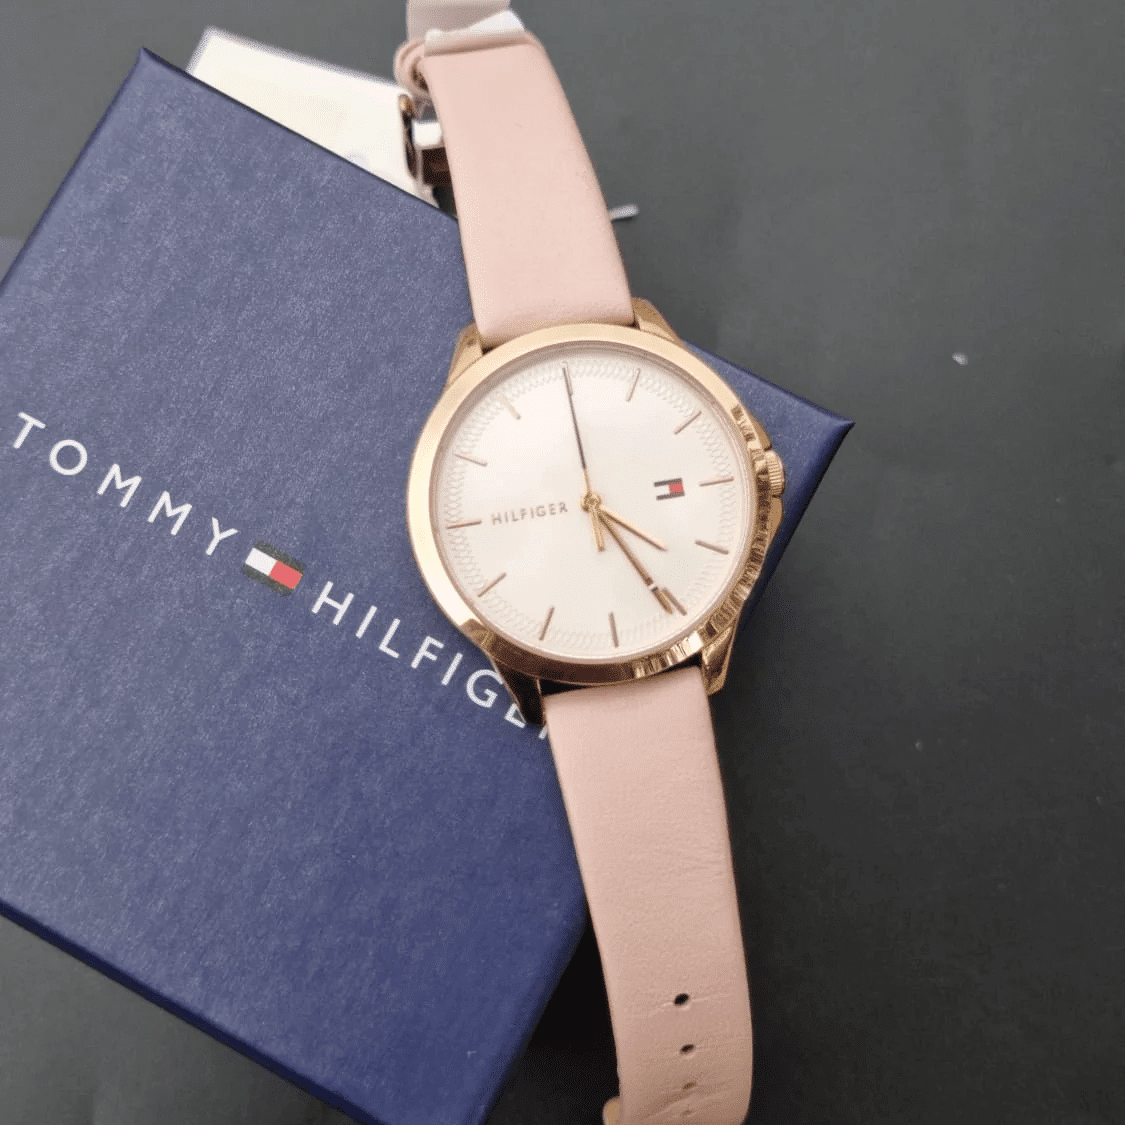 Hilfiger Peyton Leather reloj para dama - TIME El Salvador